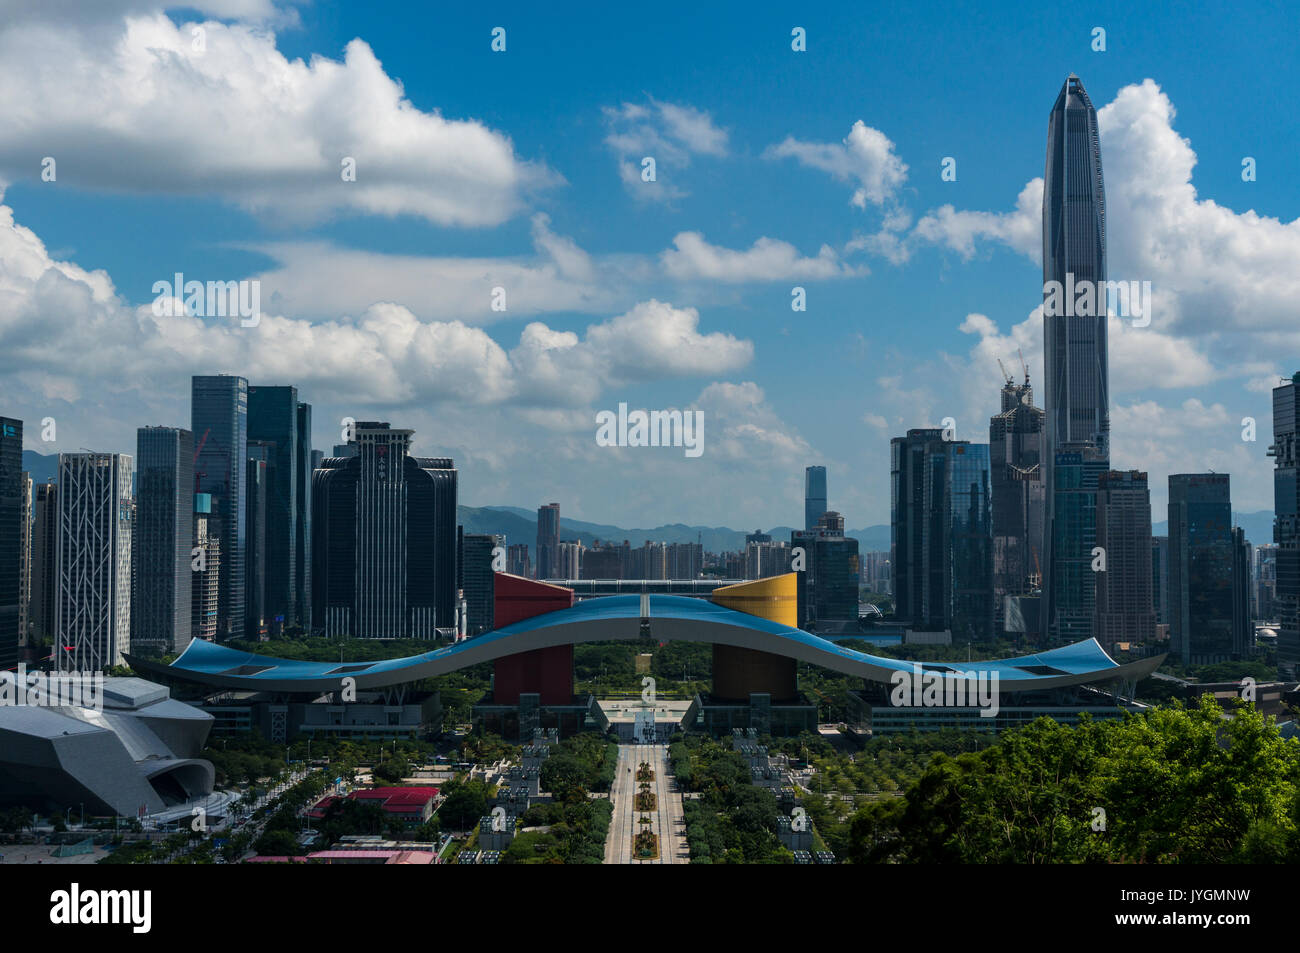 Shenzhen Civic Center, site of Shenzhen's municipal government, in Shenzhen, Guangdong province, China Stock Photo